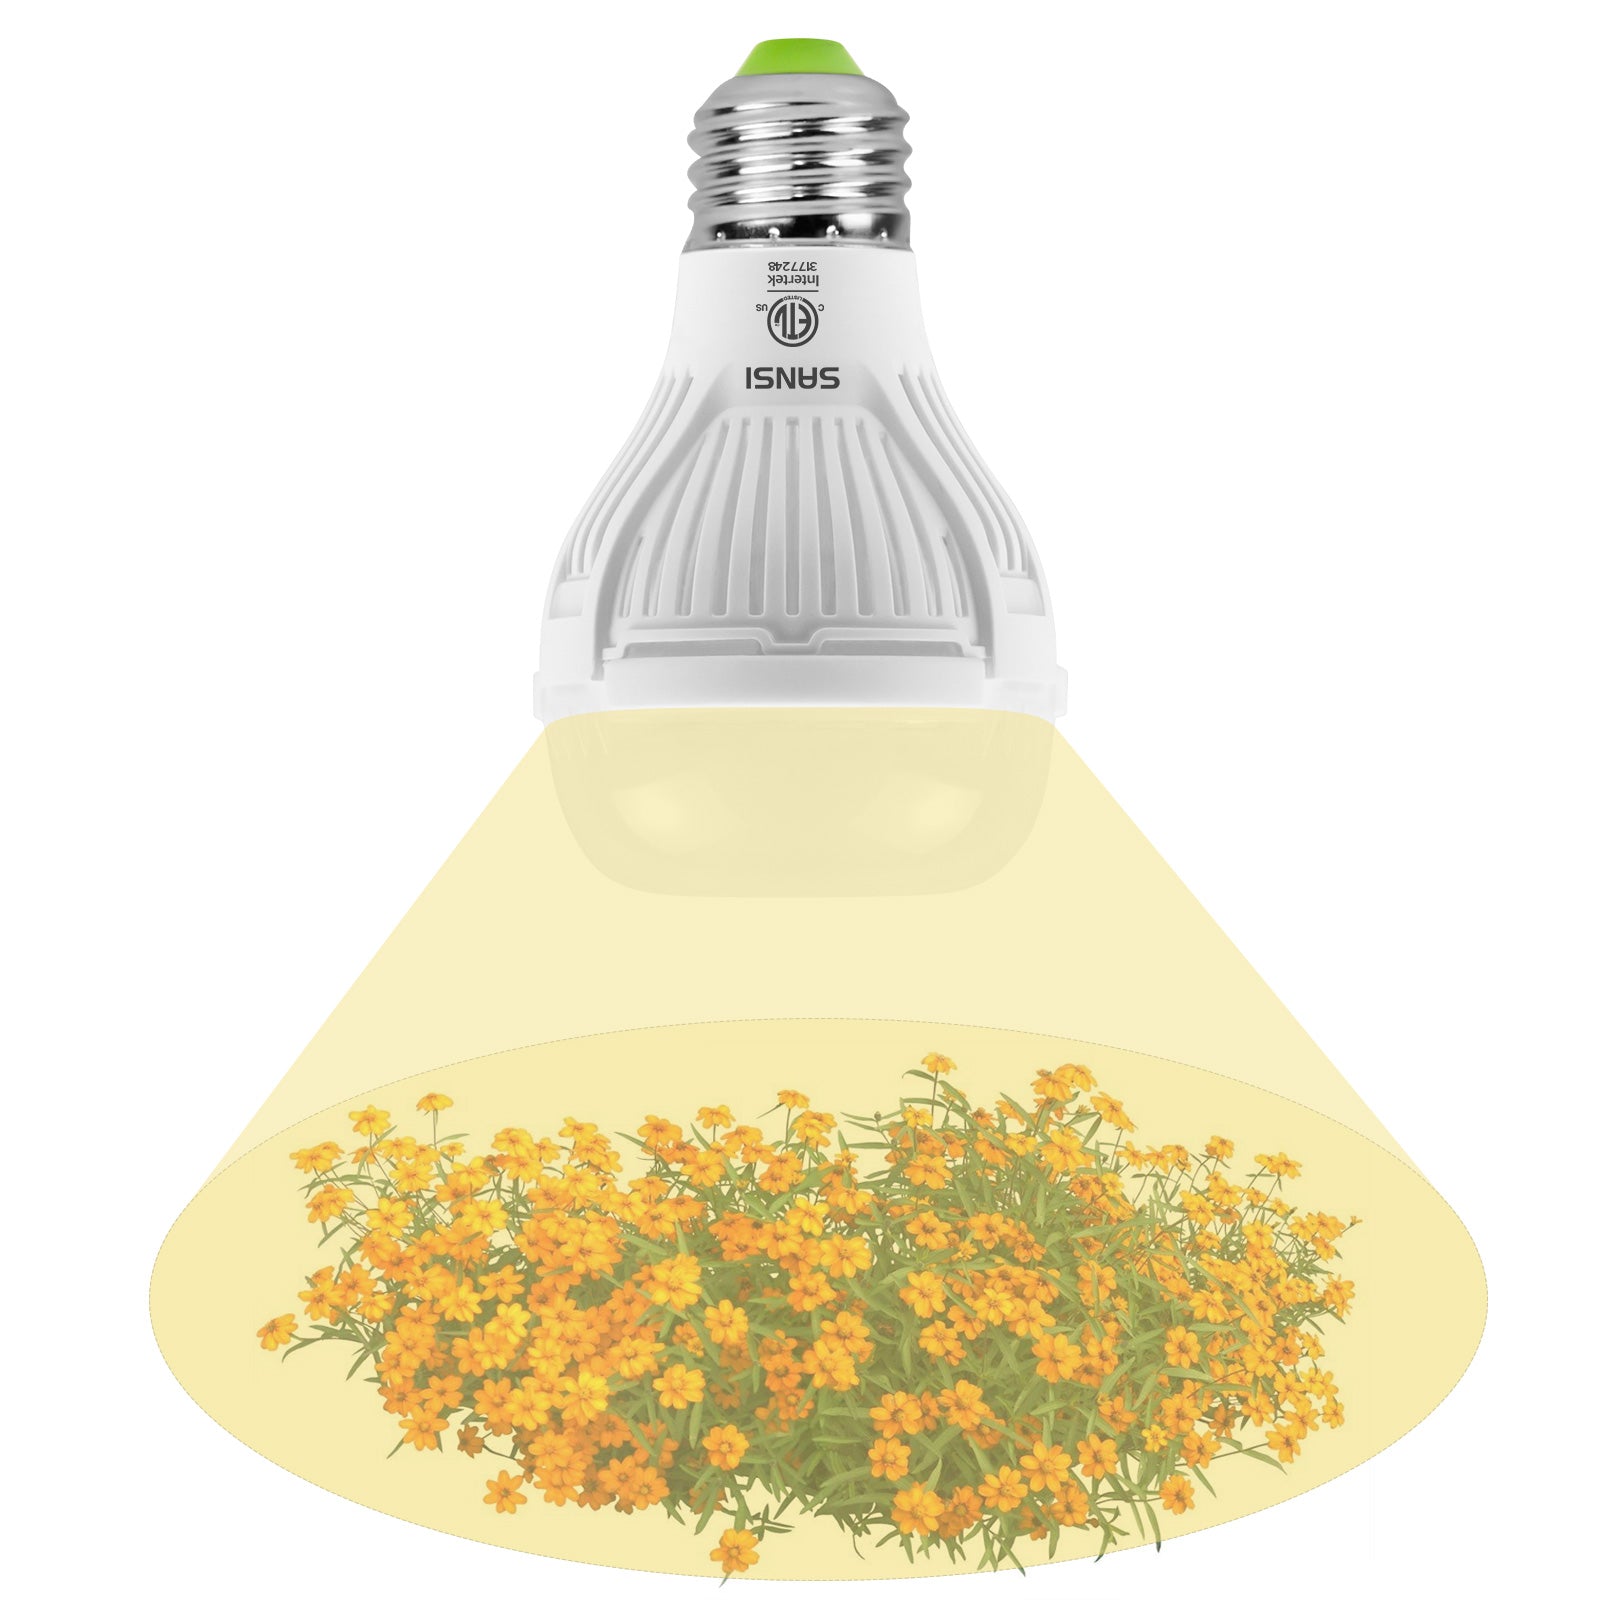 A19 10W LED Grow Light Bulb (US, EU ONLY)